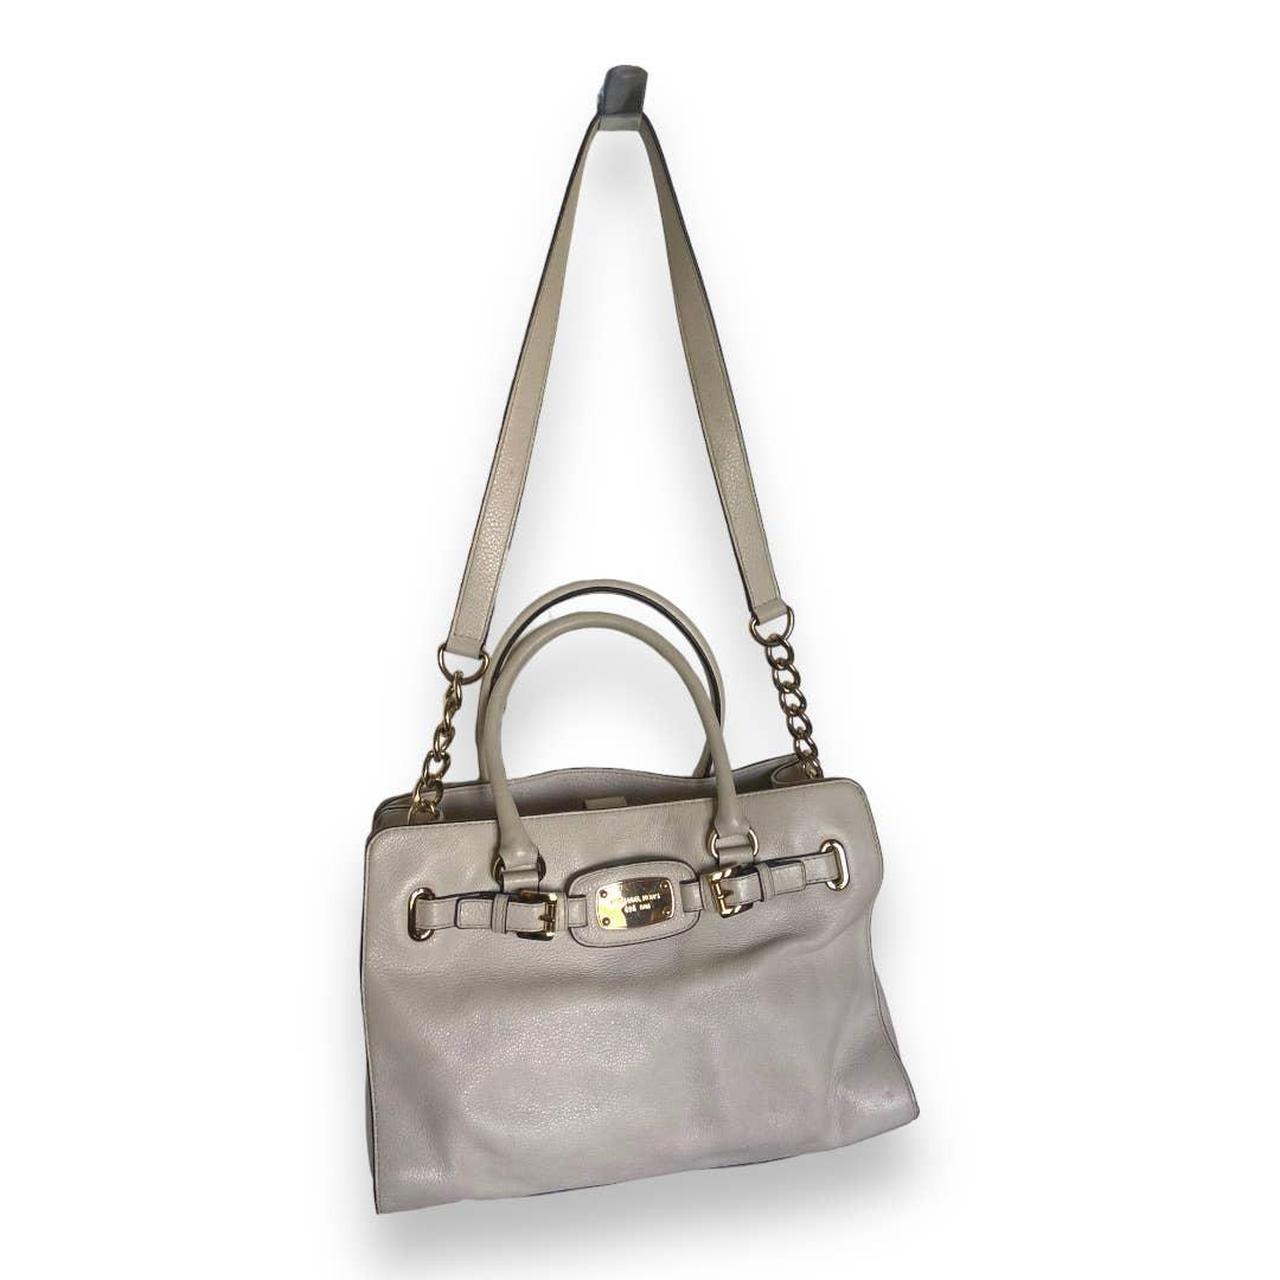 beauty | Trendy purses, Handbag essentials, Girly bags